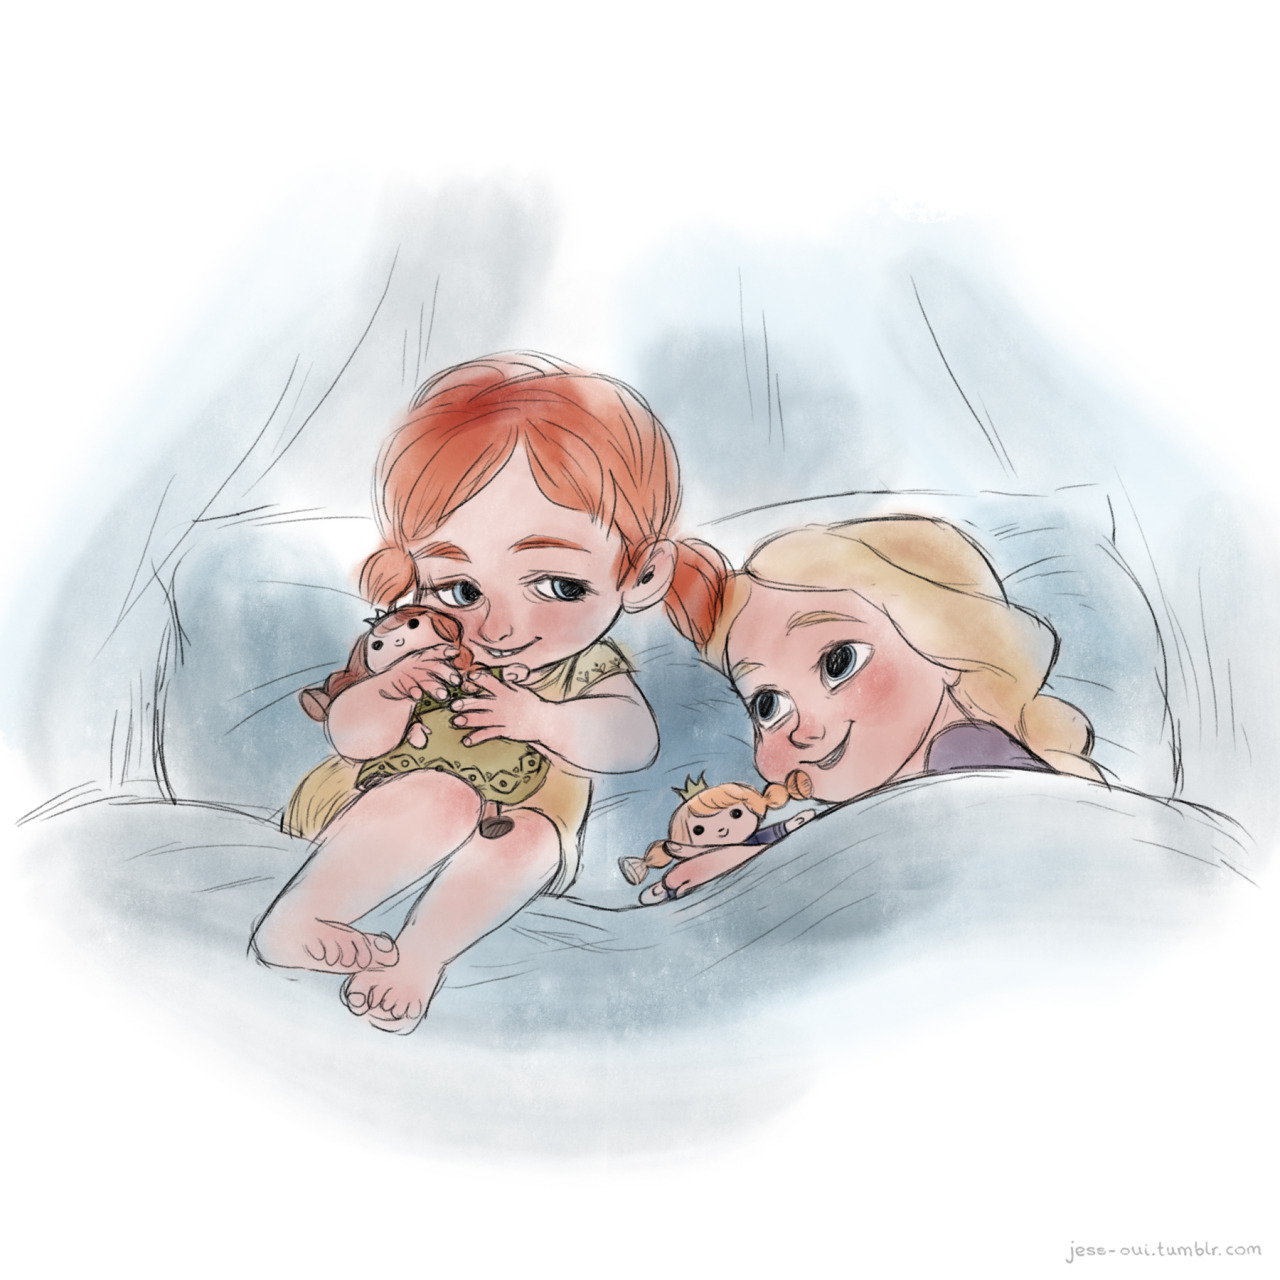 personnages - Les personnages Frozen... Enfant! - Page 3 Tumblr_ngc8ibcfbG1rzx0pqo1_1280